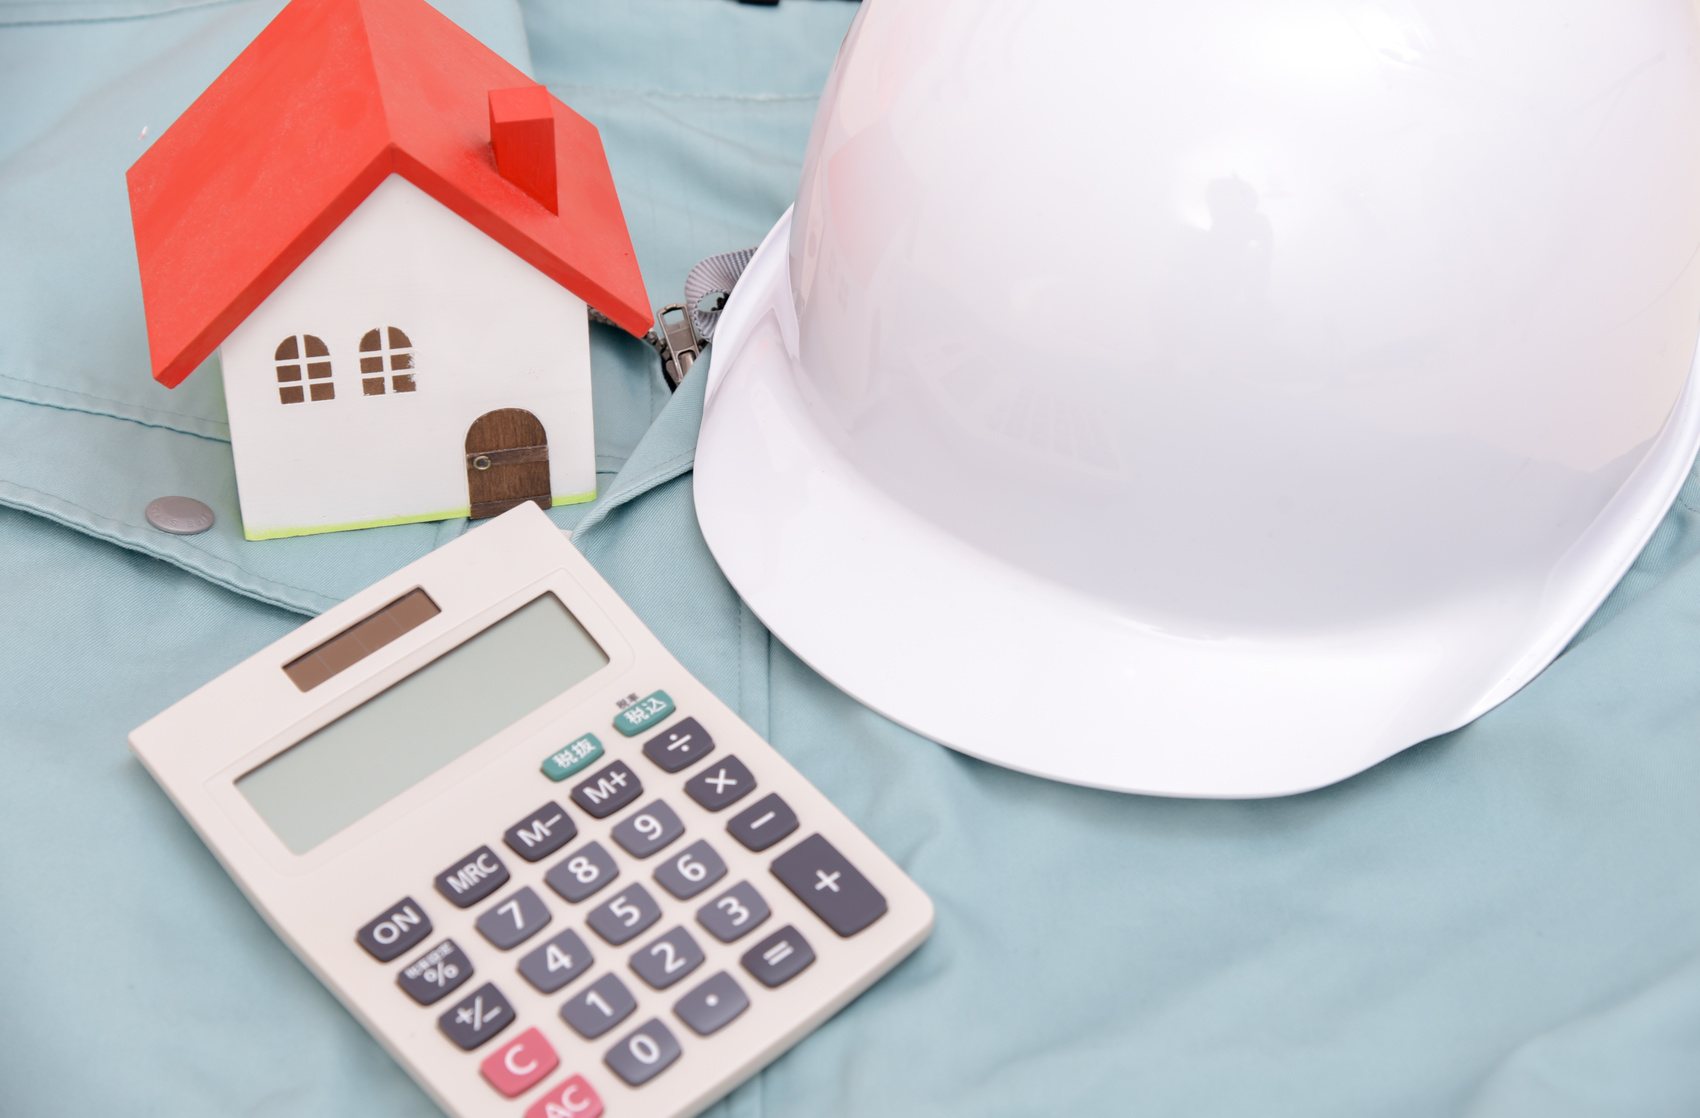 Home Maintenance Costs Choice Home Warranty